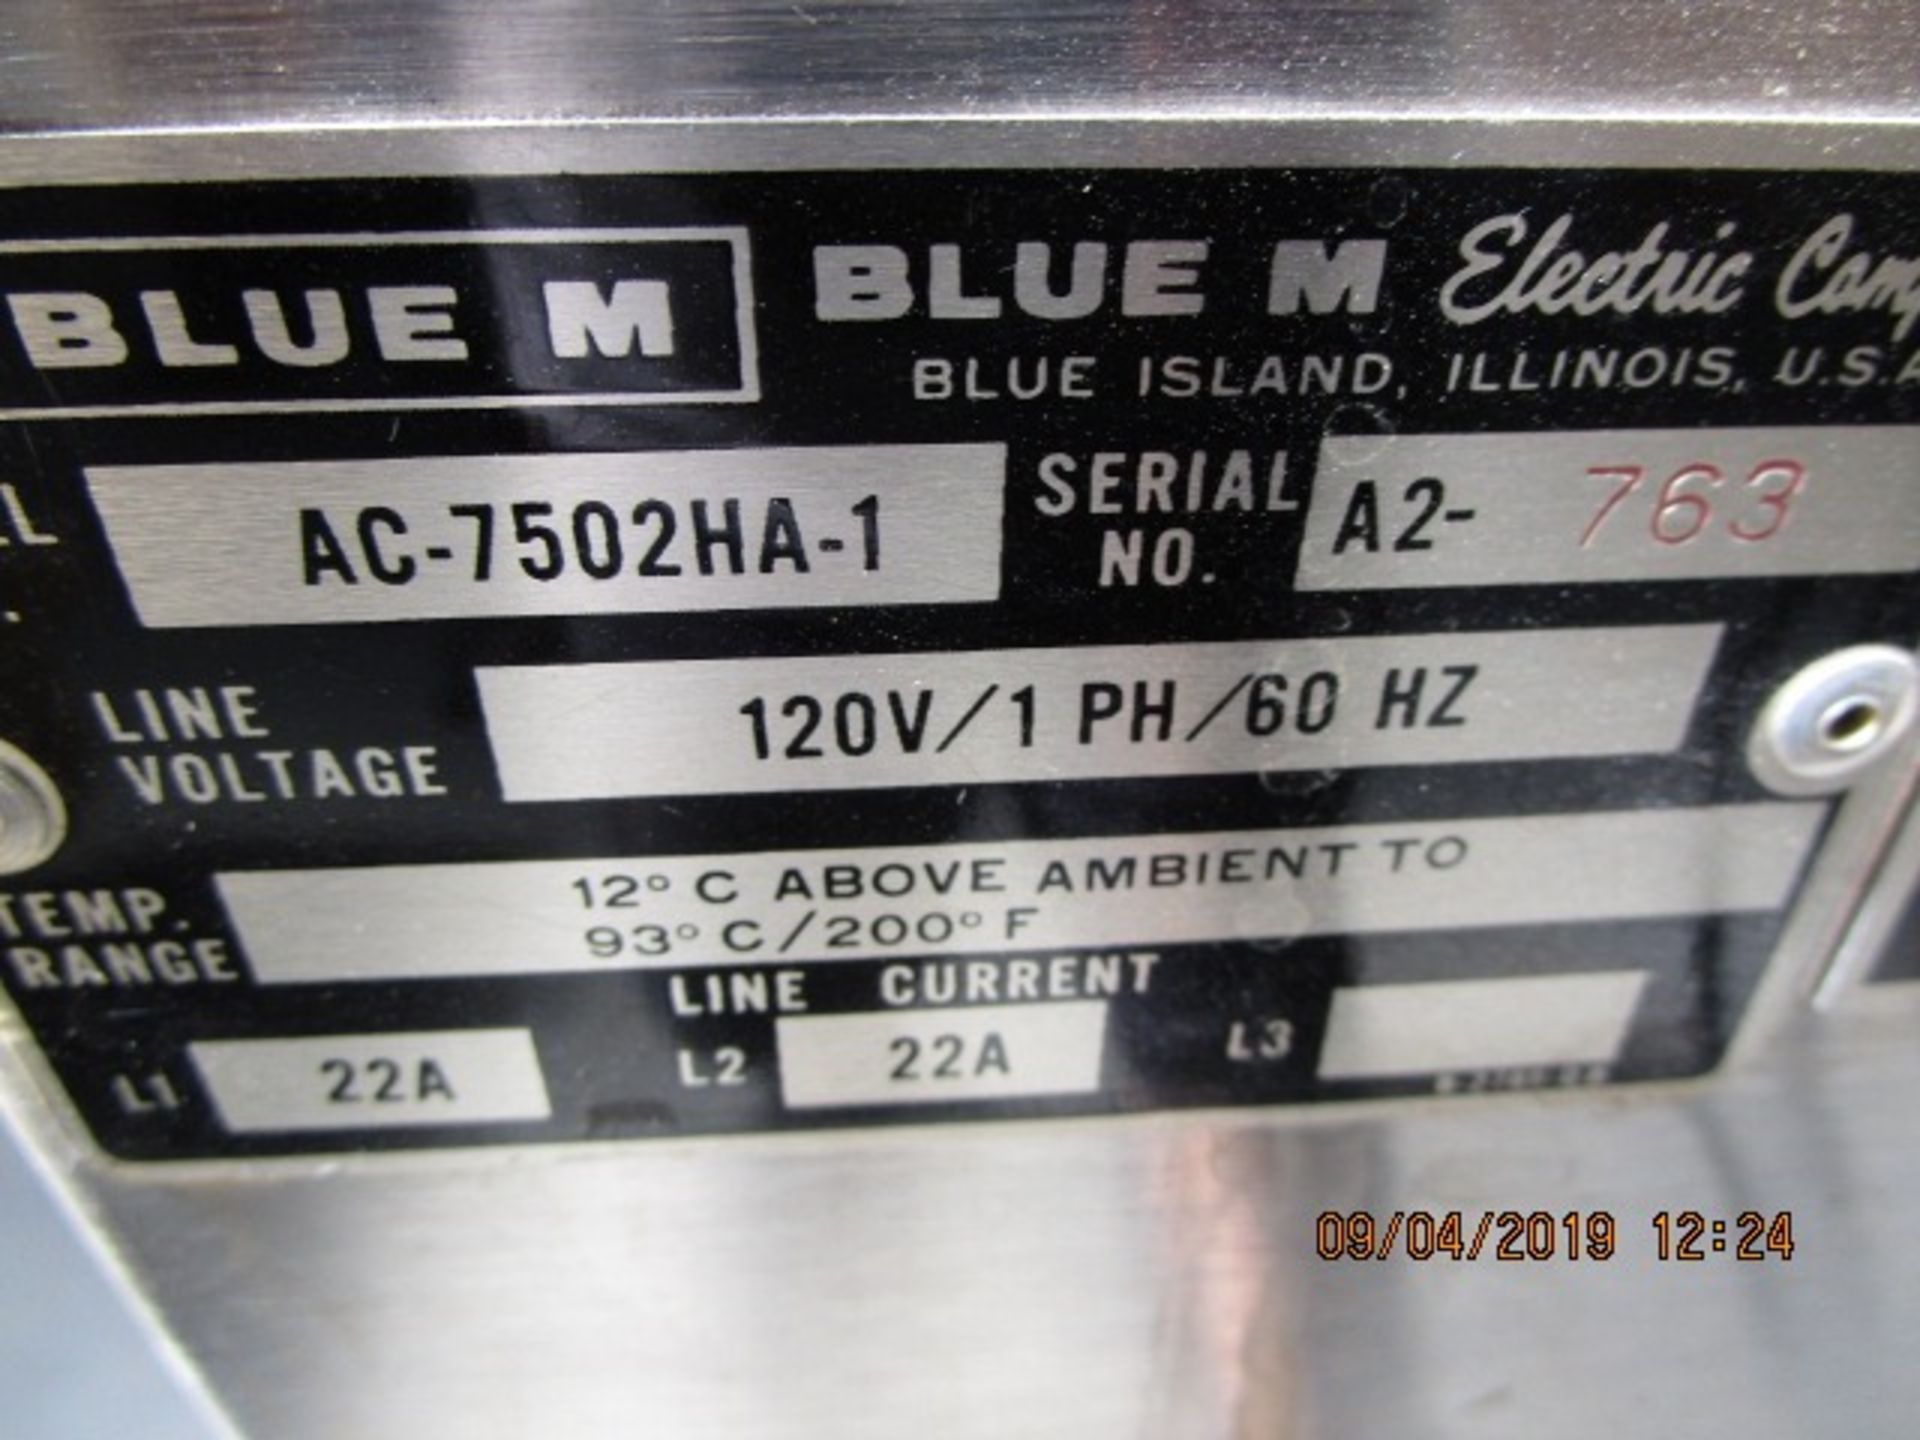 43 - BLUE M AC-7502HA-1 ENVIROMENTAL TEST CHAMBER - Image 9 of 9